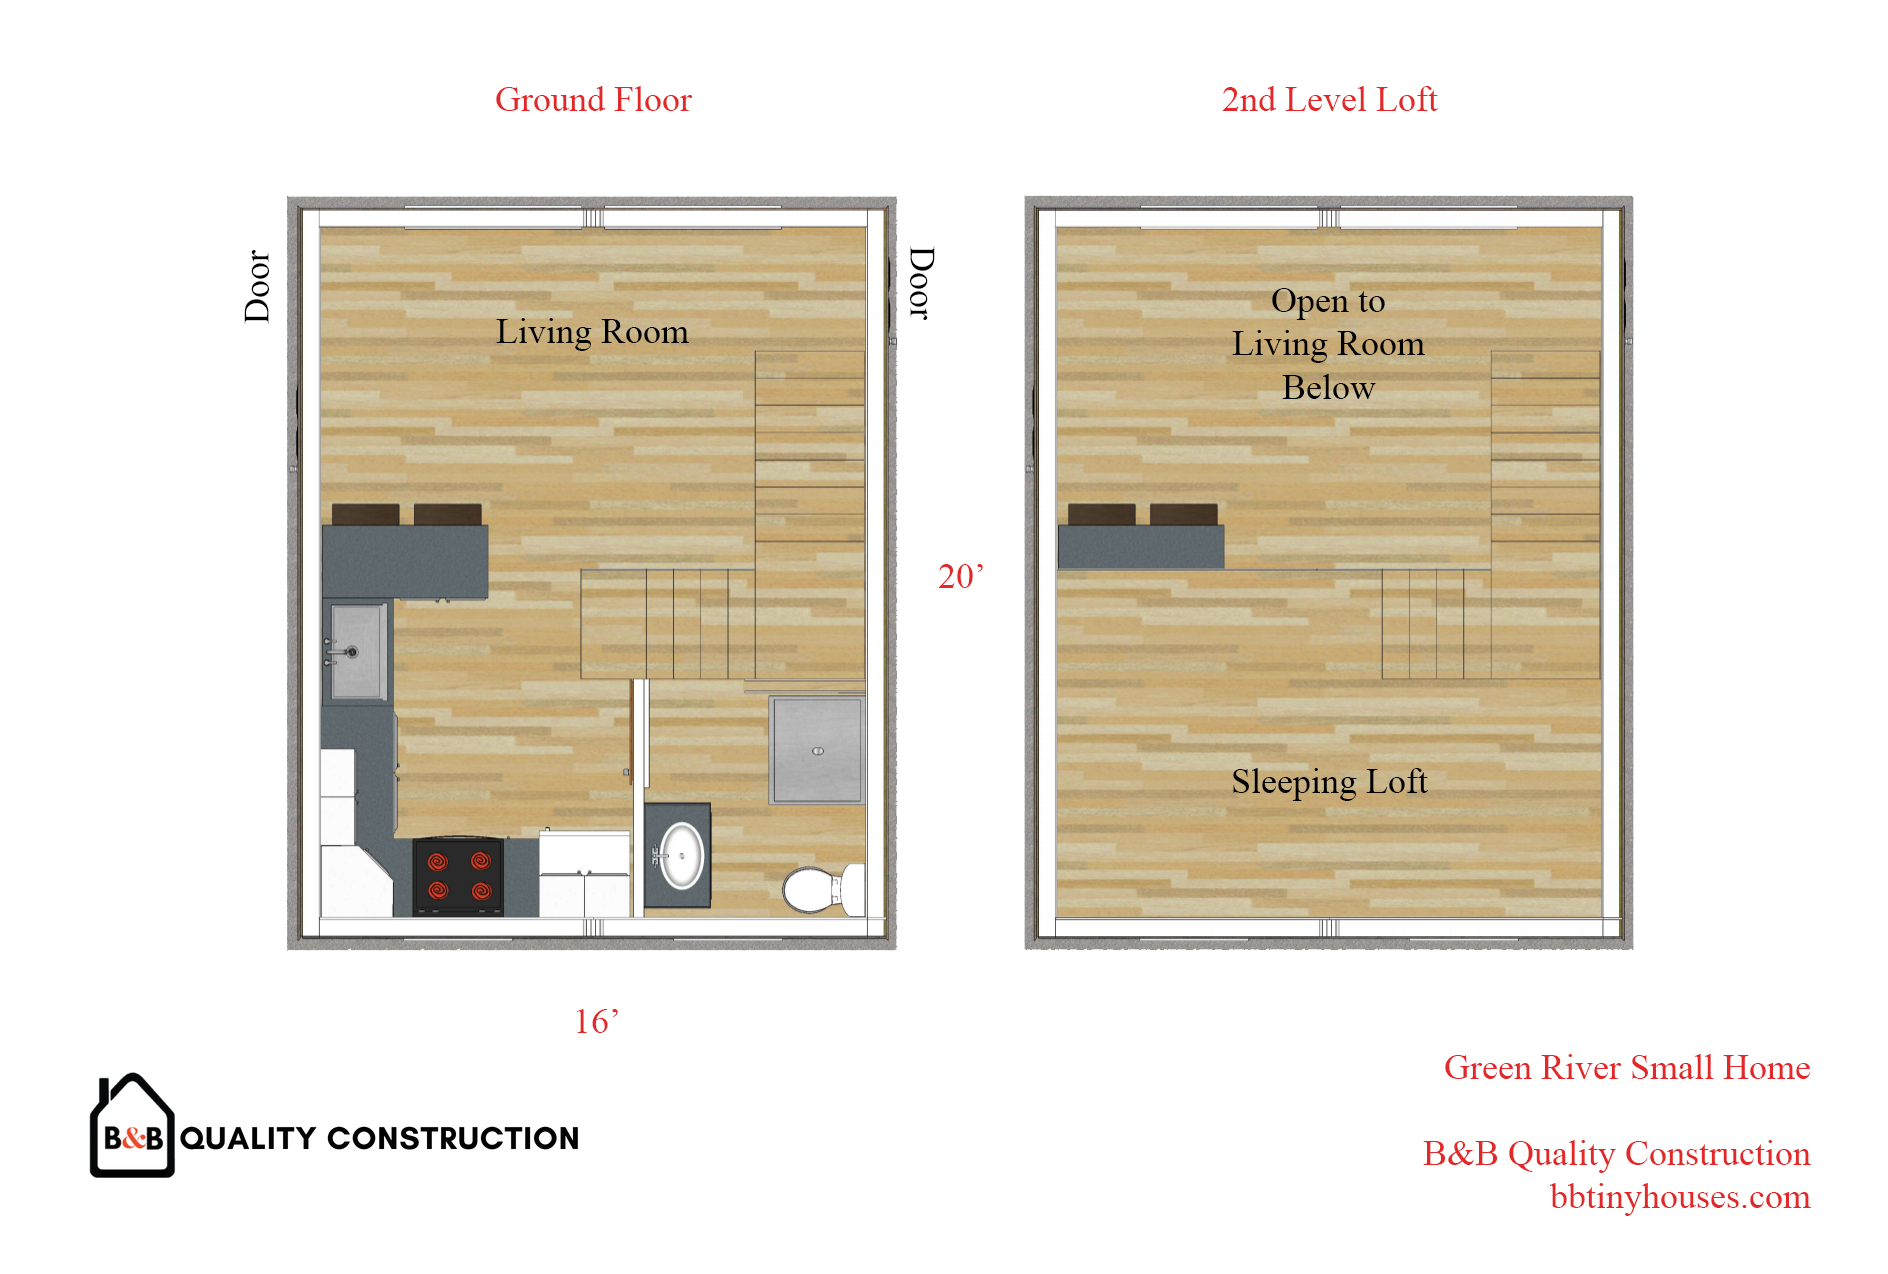 Green River Small Home Floor Plan Tiny House B&B Quality Construction 